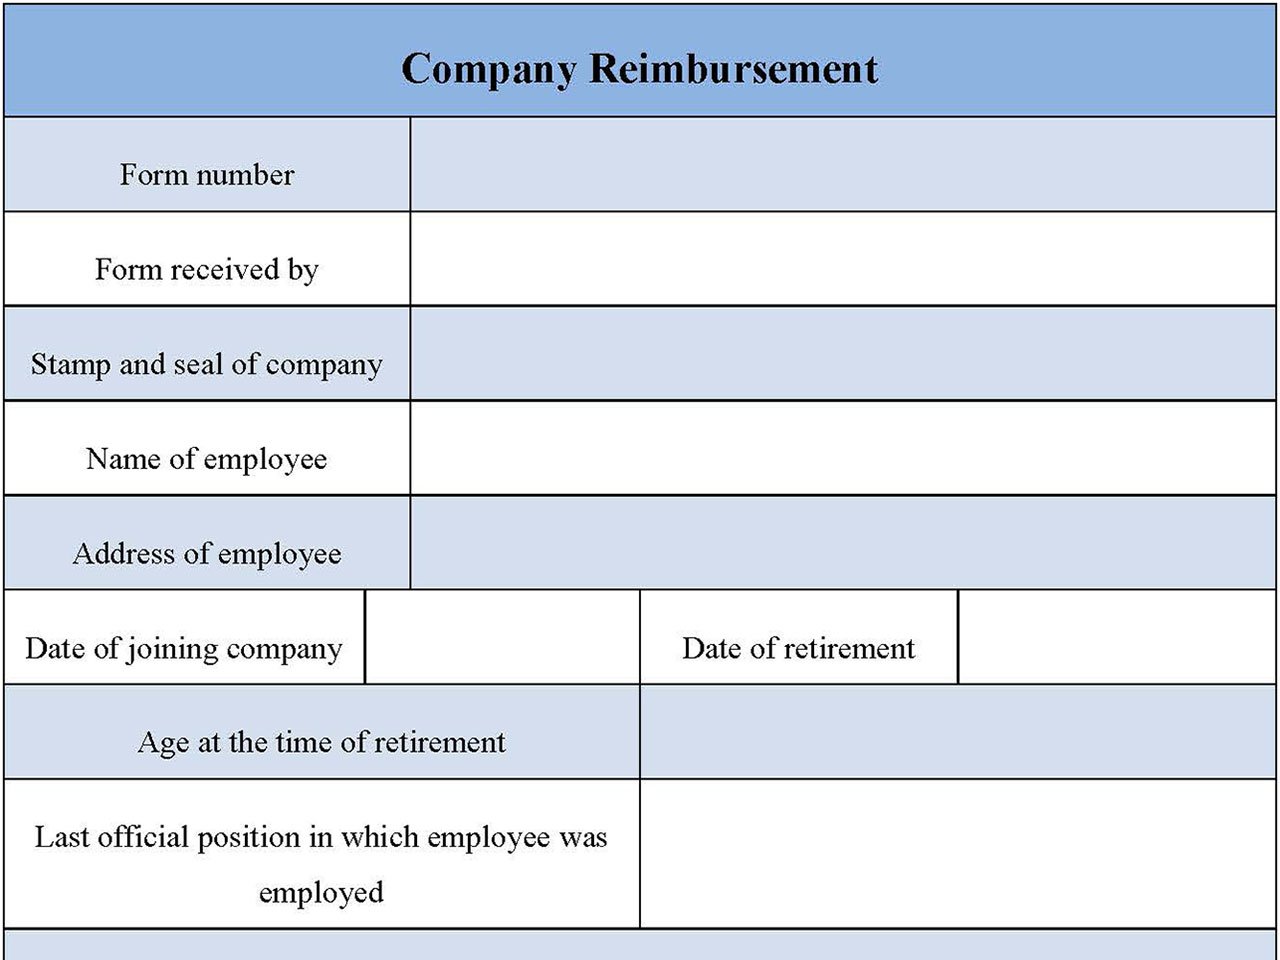 Company Reimbursement Form